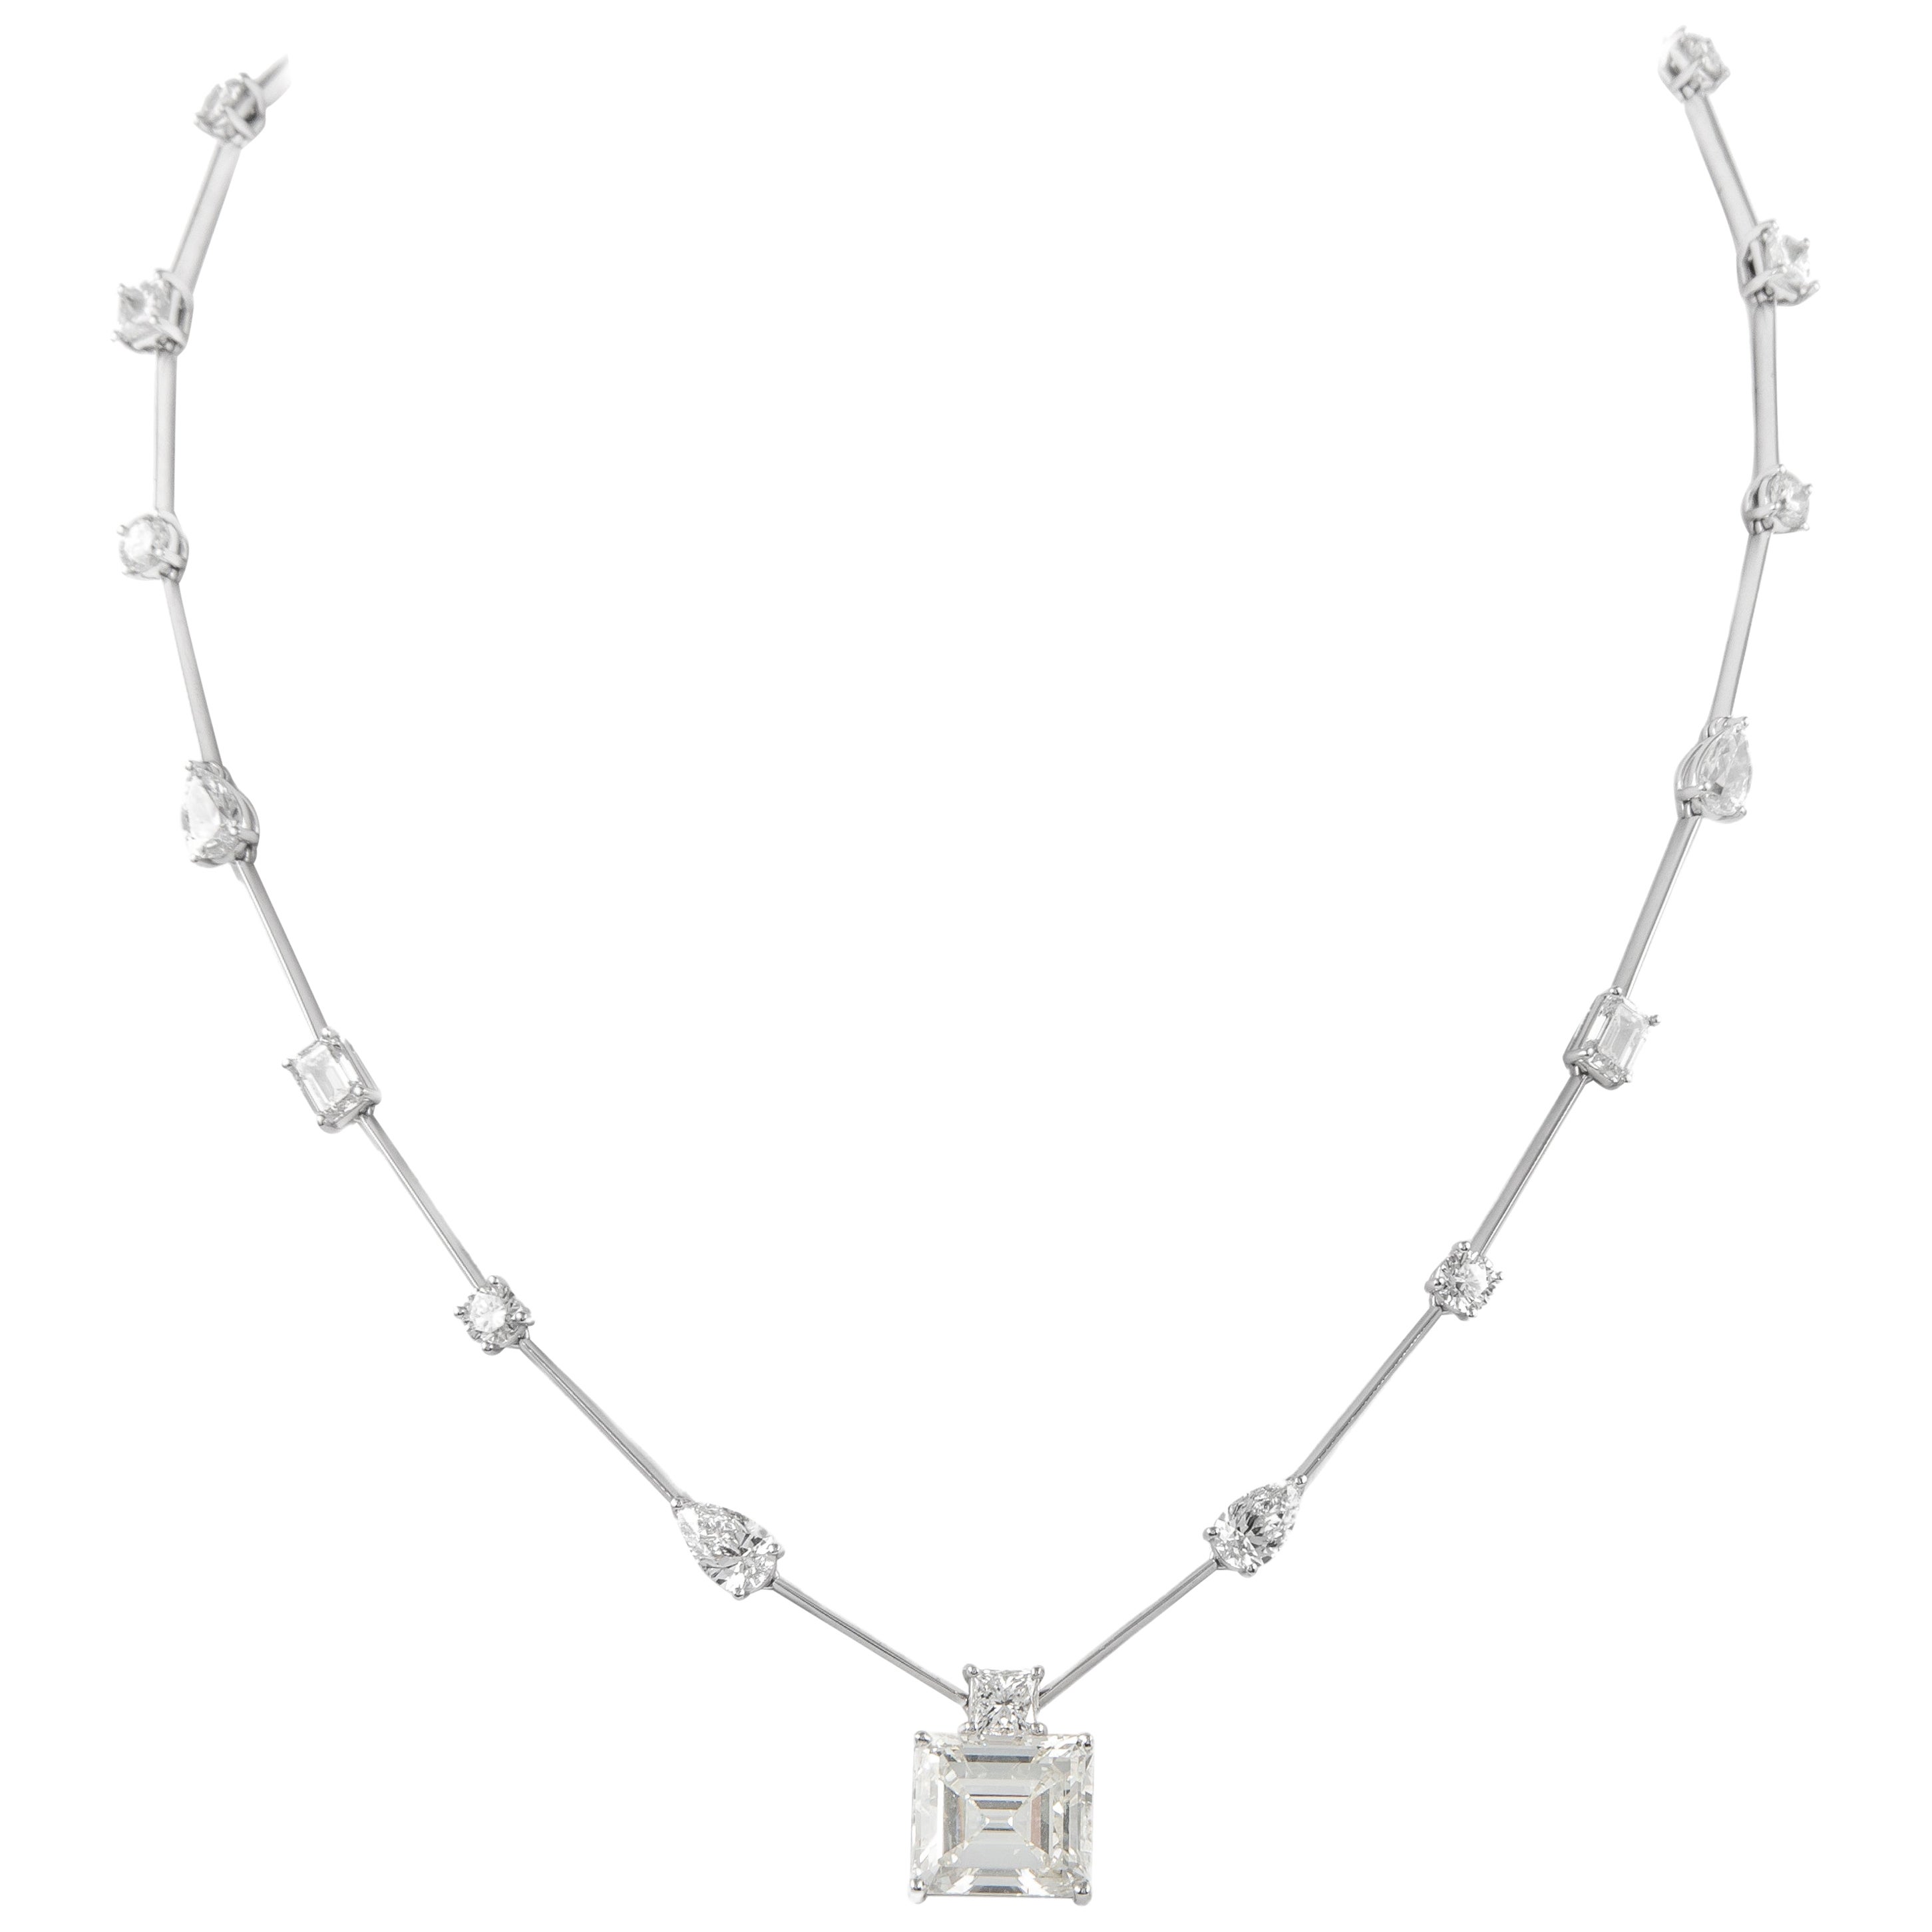 Alexander GIA 5.54ct Square Emerald Cut Diamond Necklace with Diamonds 18k Gold